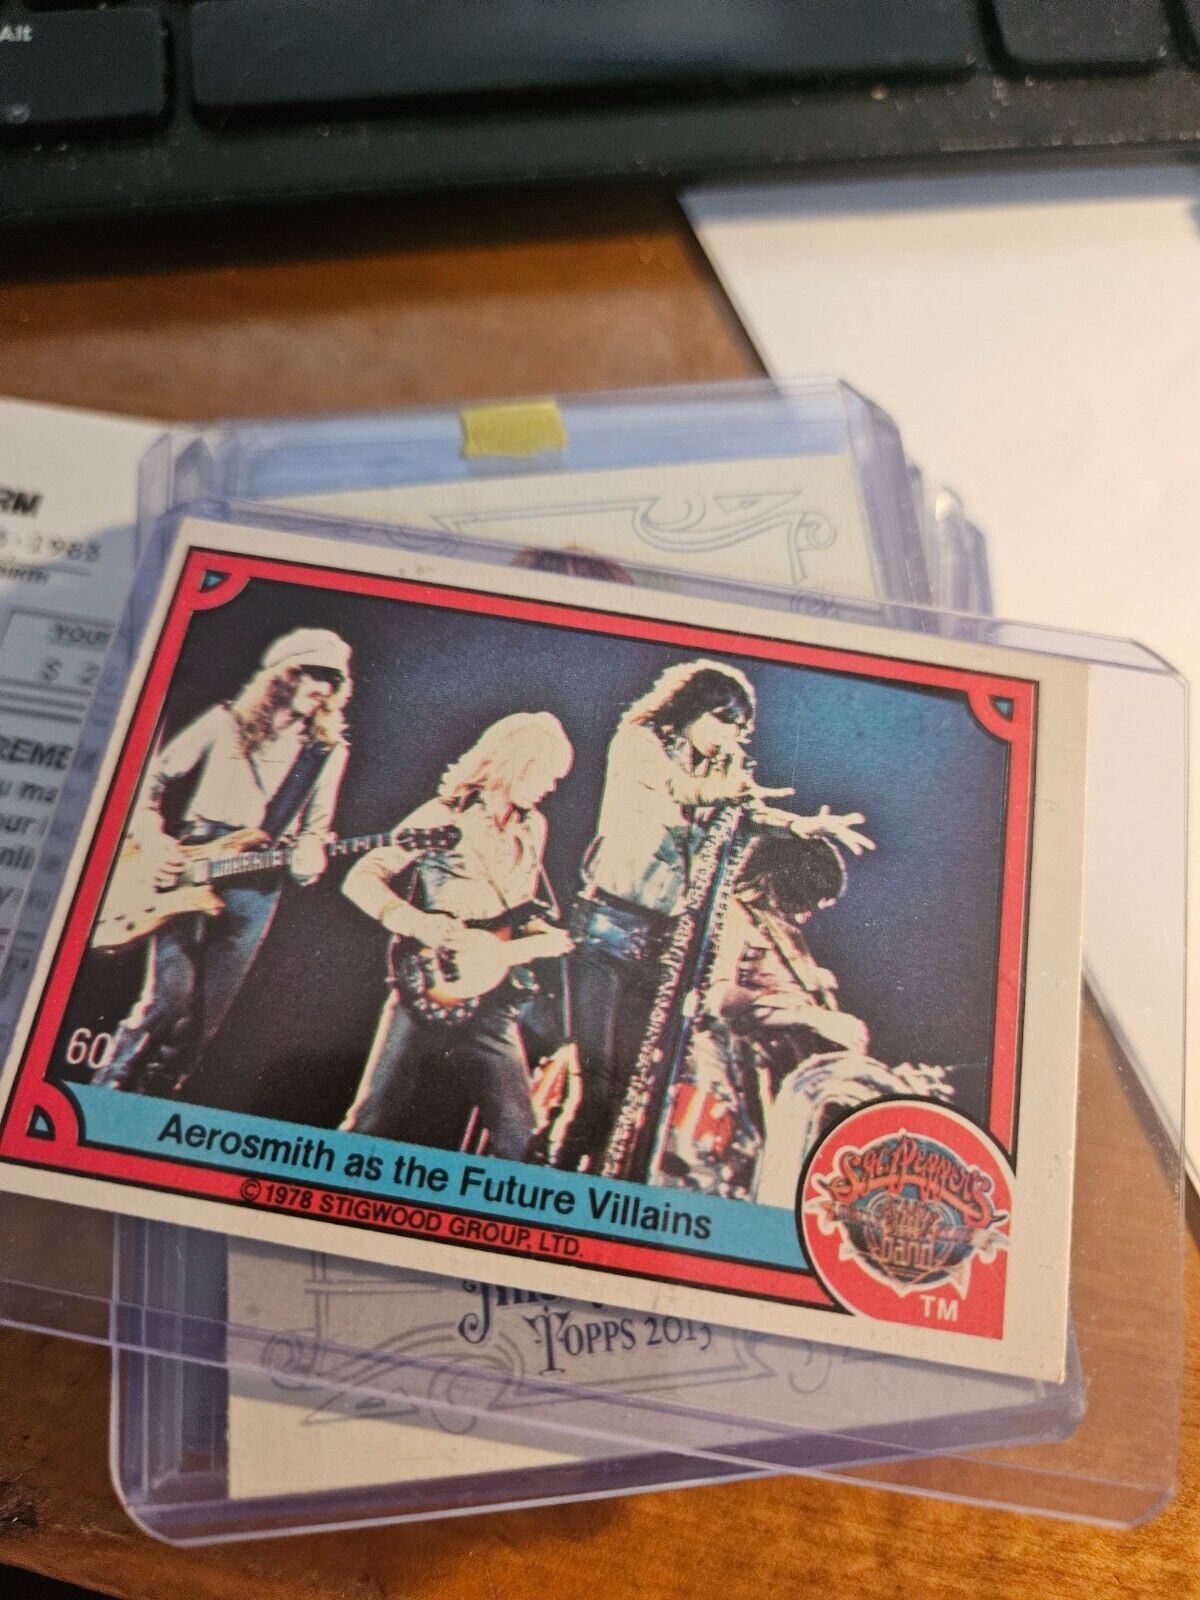 1978 Donruss Aerosmith Rookie Card Sgt Peppers #60 Aerosmith as Future Villains